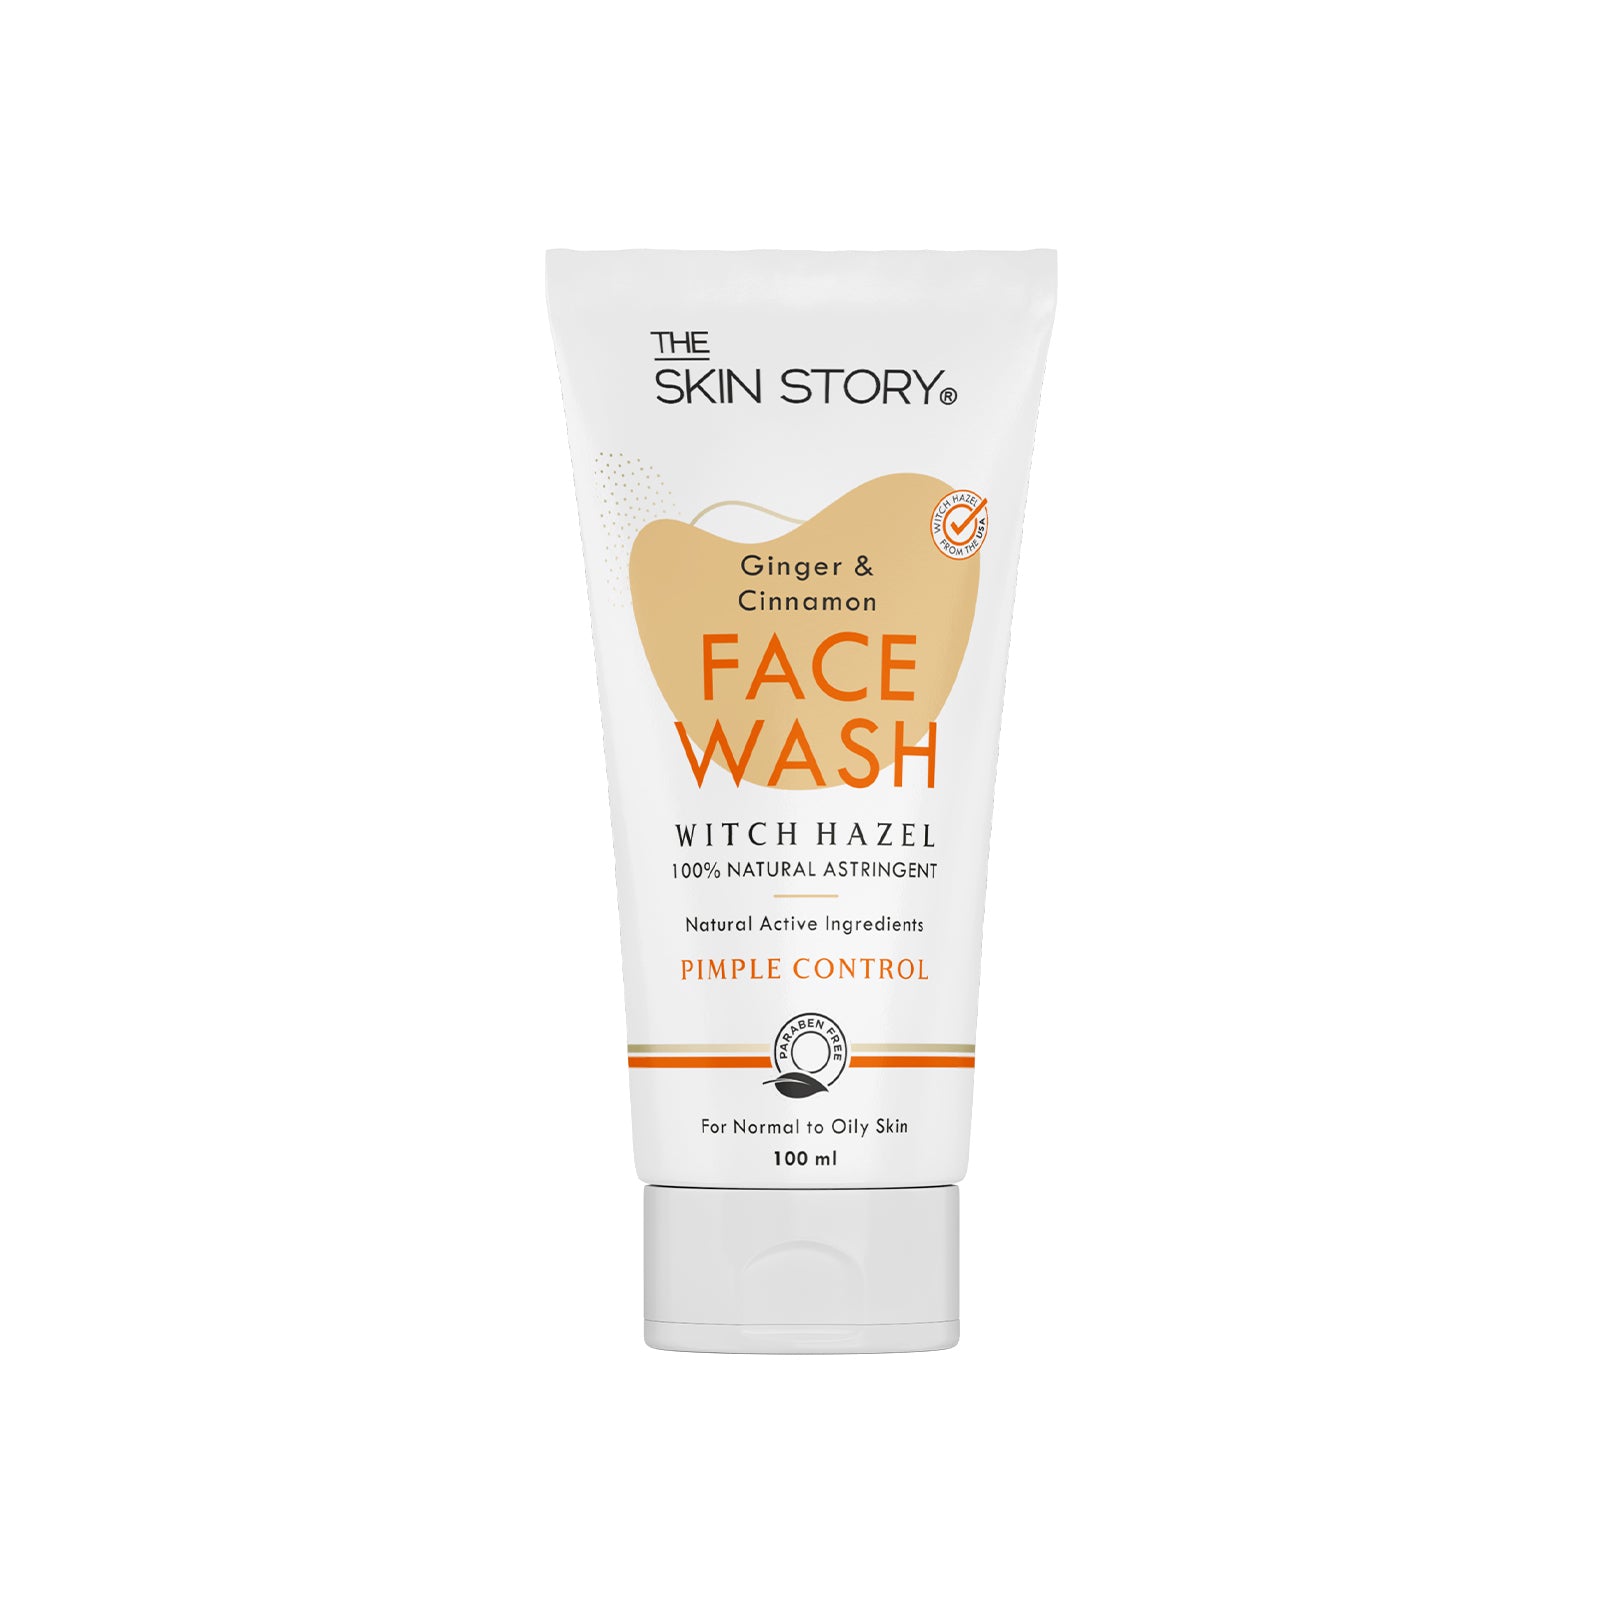 The Skin Story Pimple & Acne Control Facewash for Women | Sensitive Skin, Oily & Pimple Control Skin | Ginger, Cinnamon, Witch Hazel | 100ml